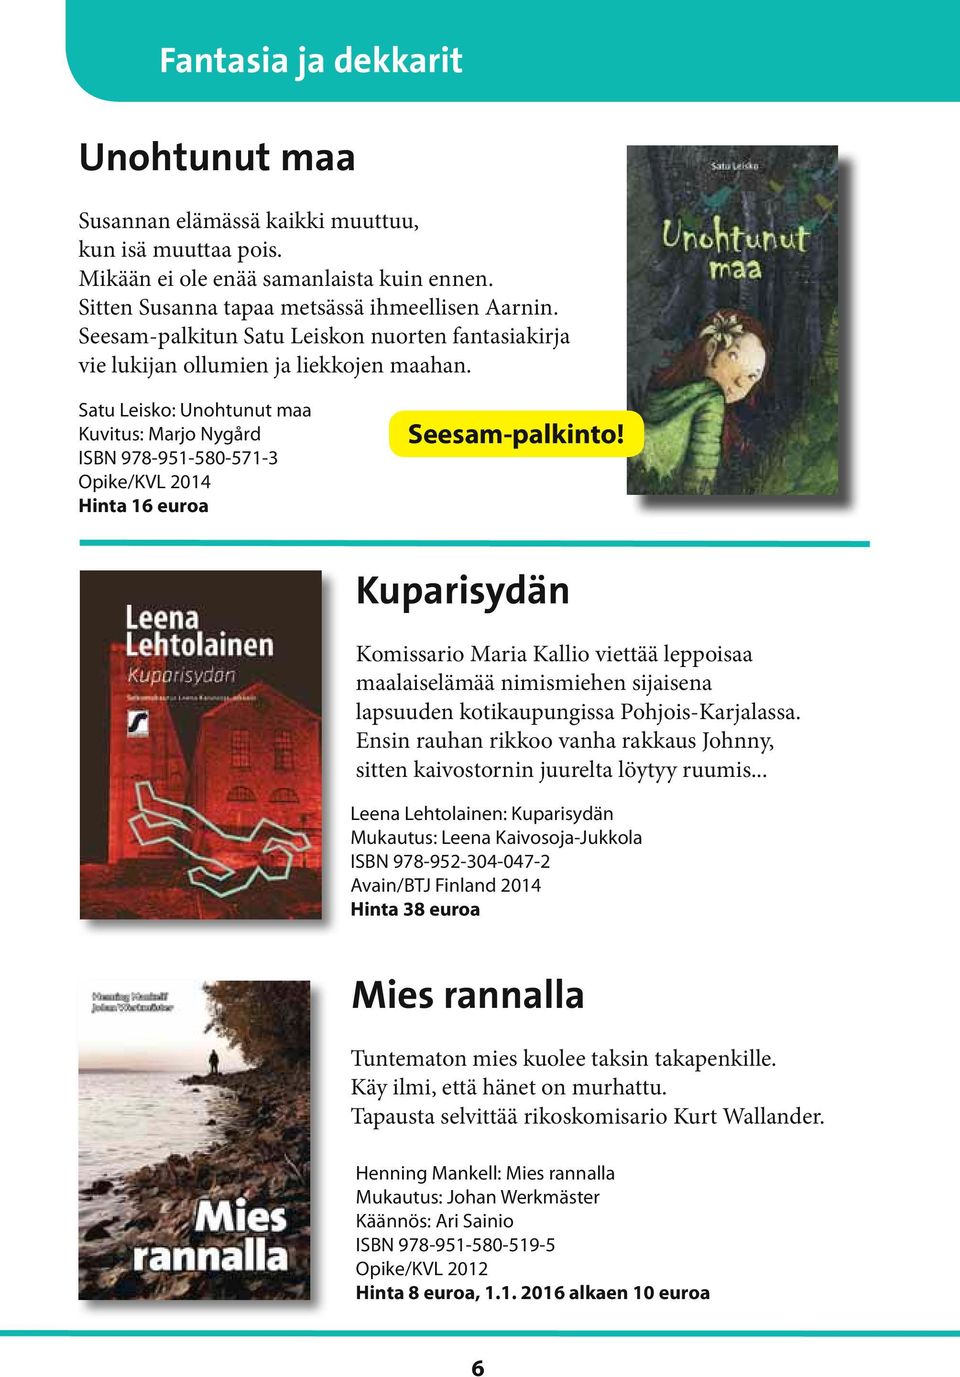 Satu Leisko: Unohtunut maa Kuvitus: Marjo Nygård ISBN 978-951-580-571-3 Opike/KVL 2014 Hinta 16 euroa Seesam-palkinto!